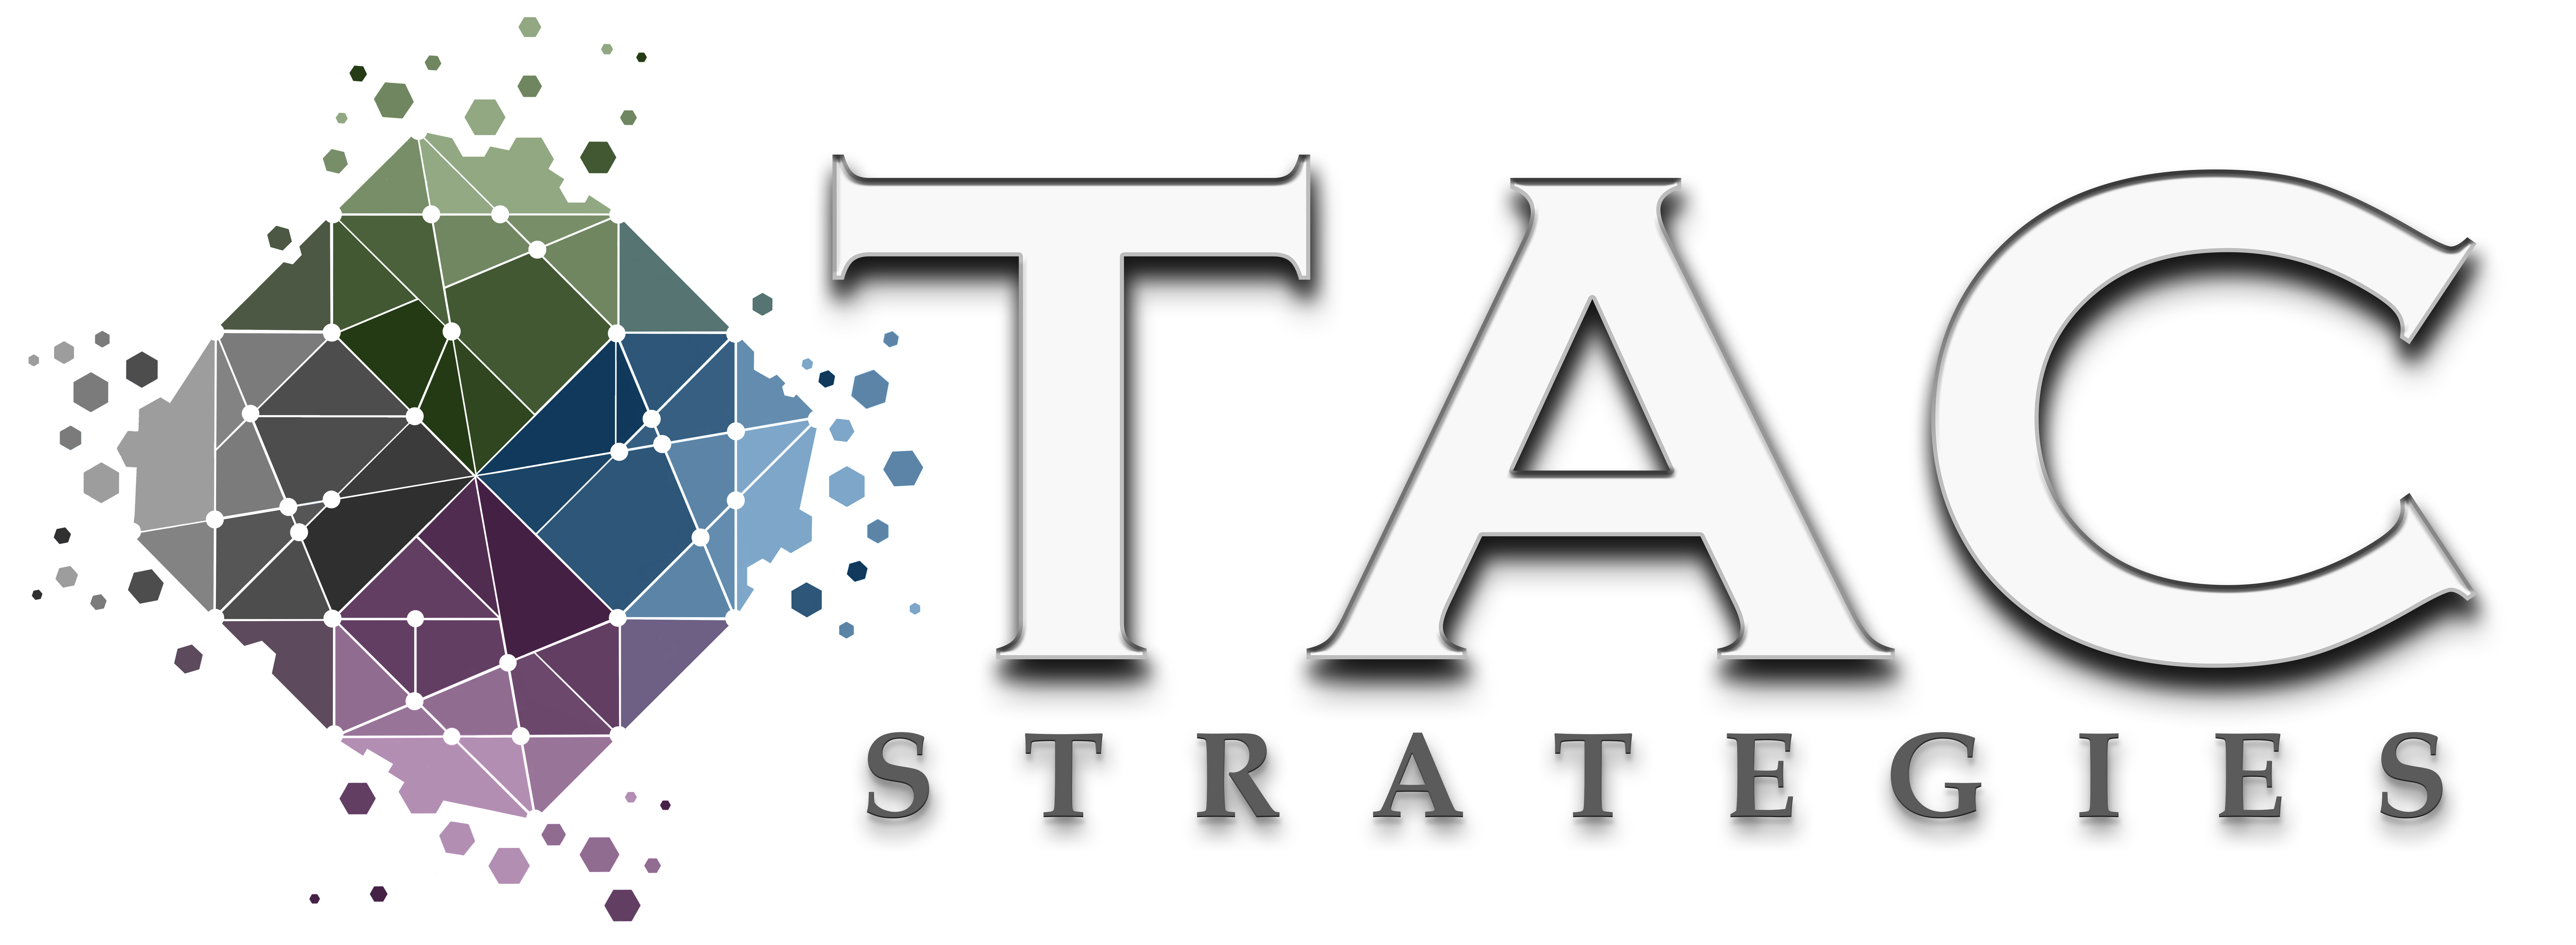 TAC logo header